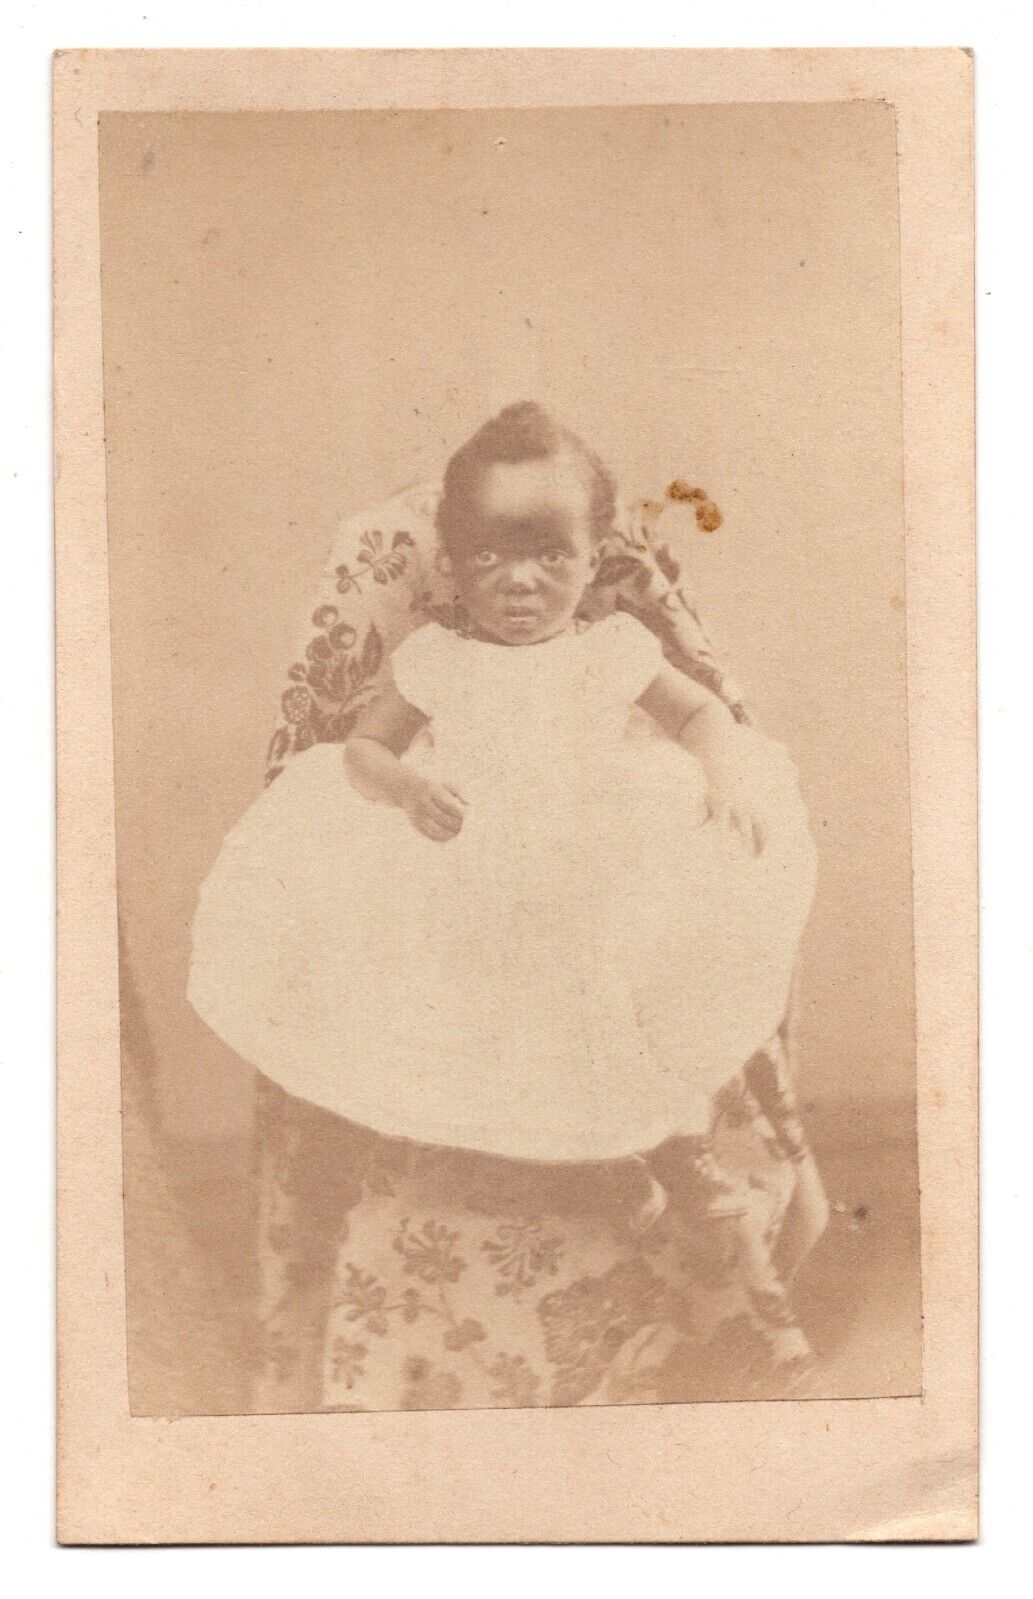 ANTIQUE CDV CIRCA 1860s AFRICAN AMERICAN BABY IN WHITE DRESS CIVIL WAR ERA